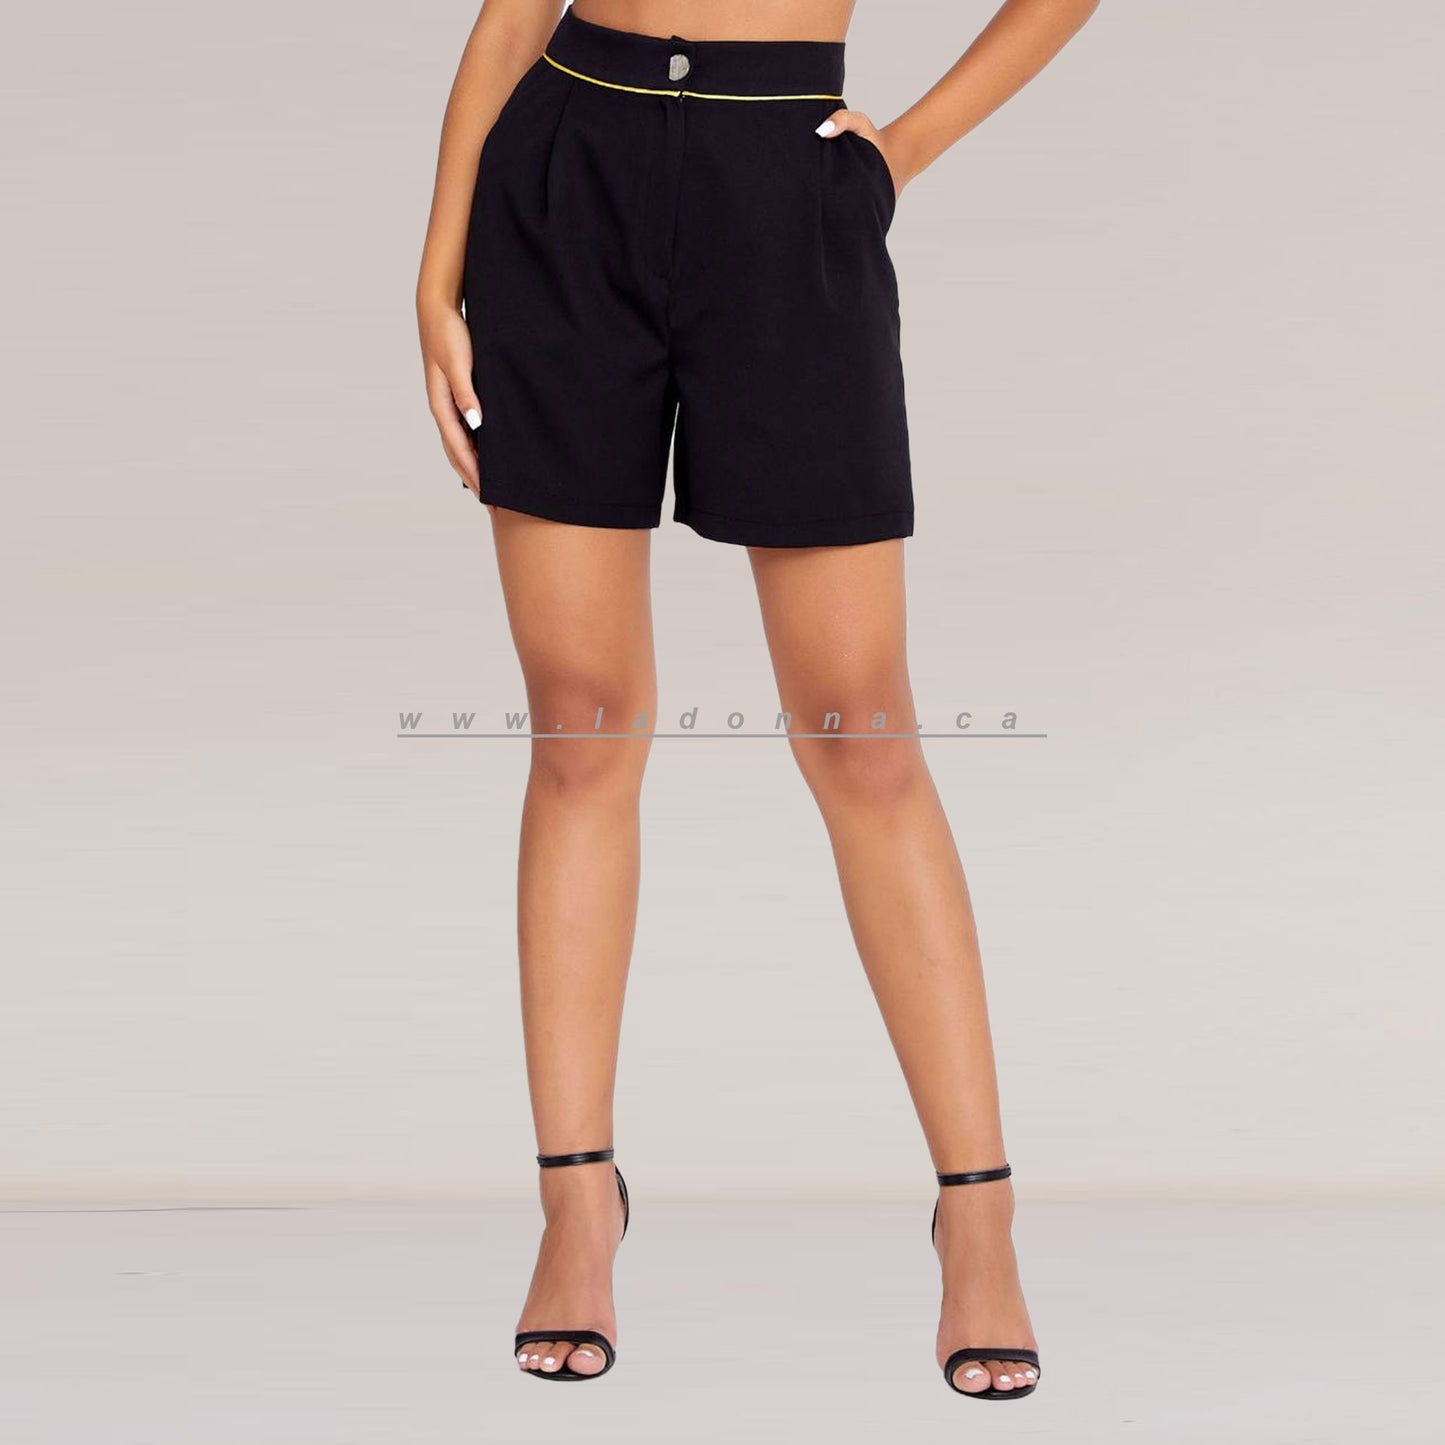 Crepe and stylish Black Shorts with Pockets